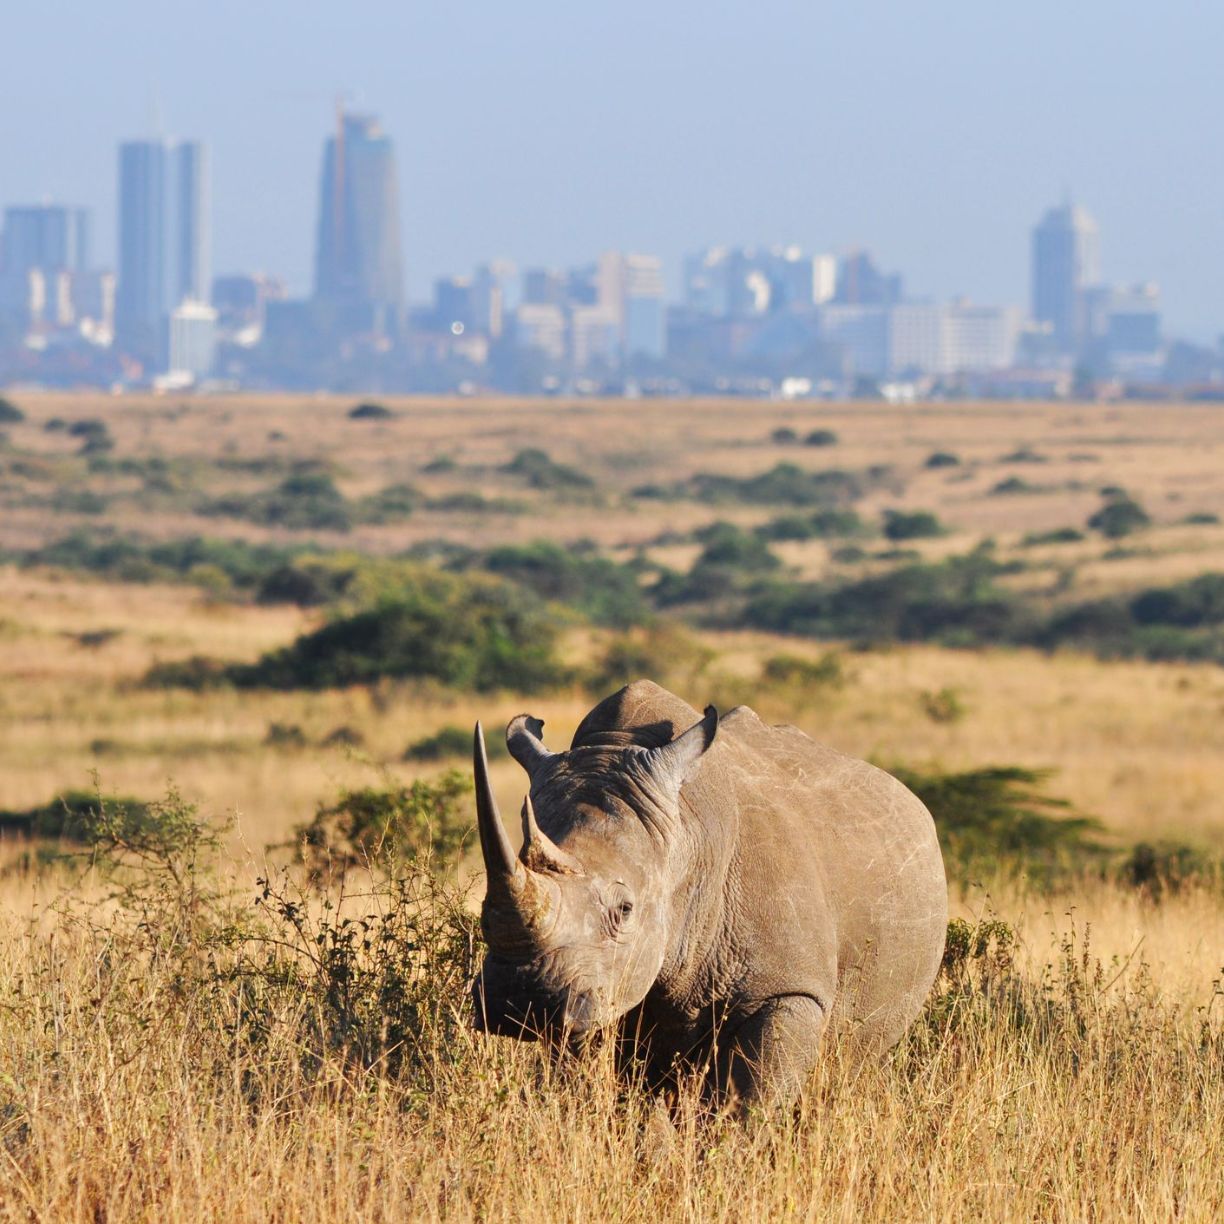 Nairobi National Park (14km)